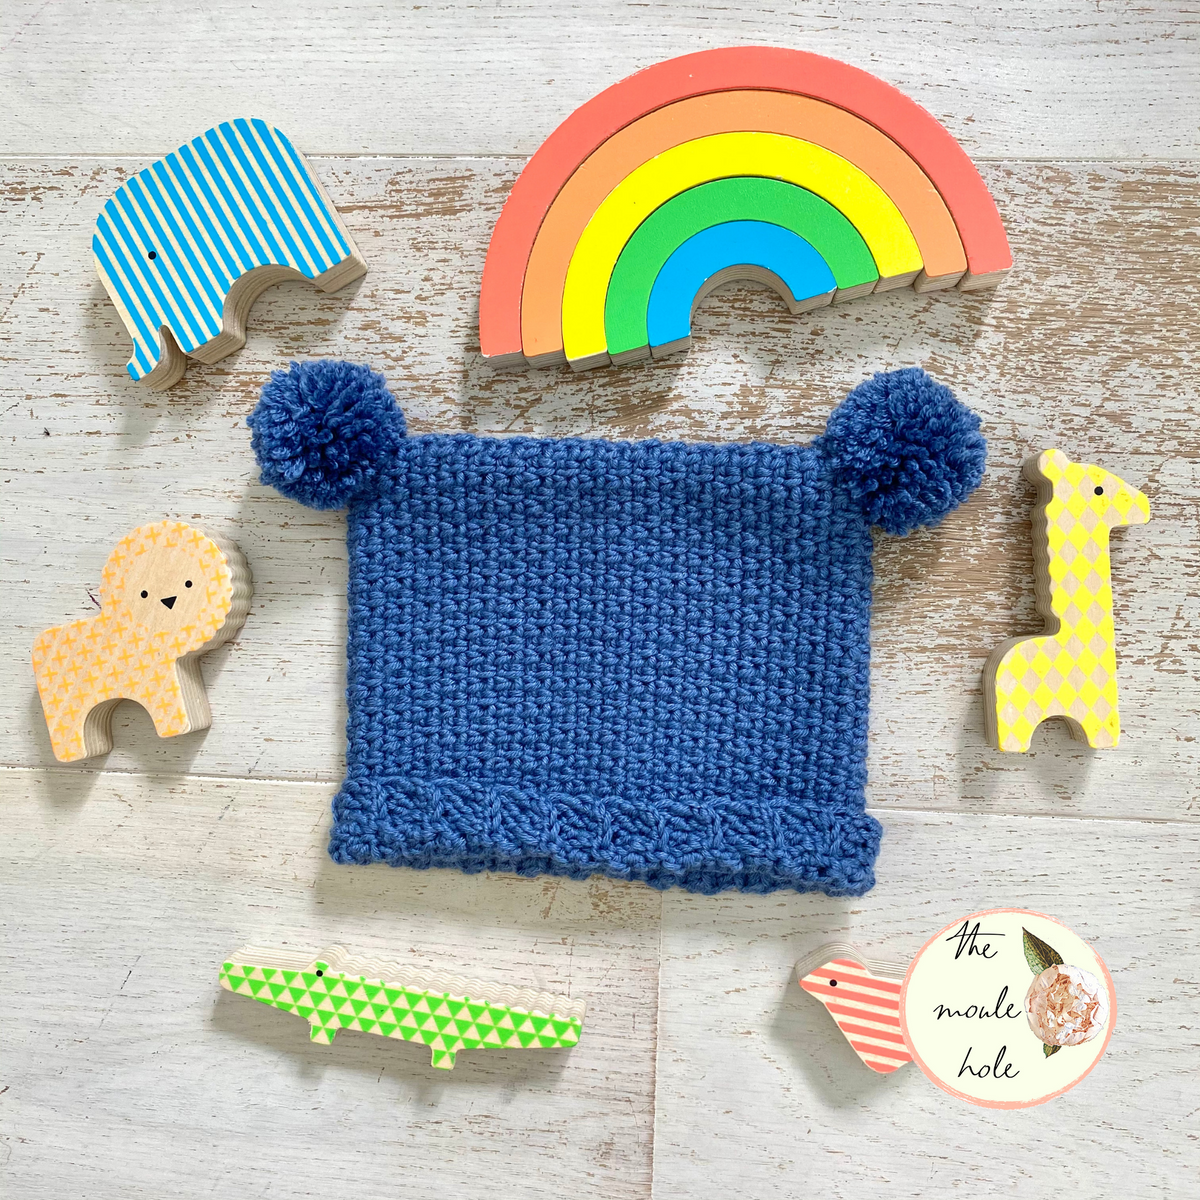 Mini Moule Bonnet Crochet Pattern – The Moule Hole